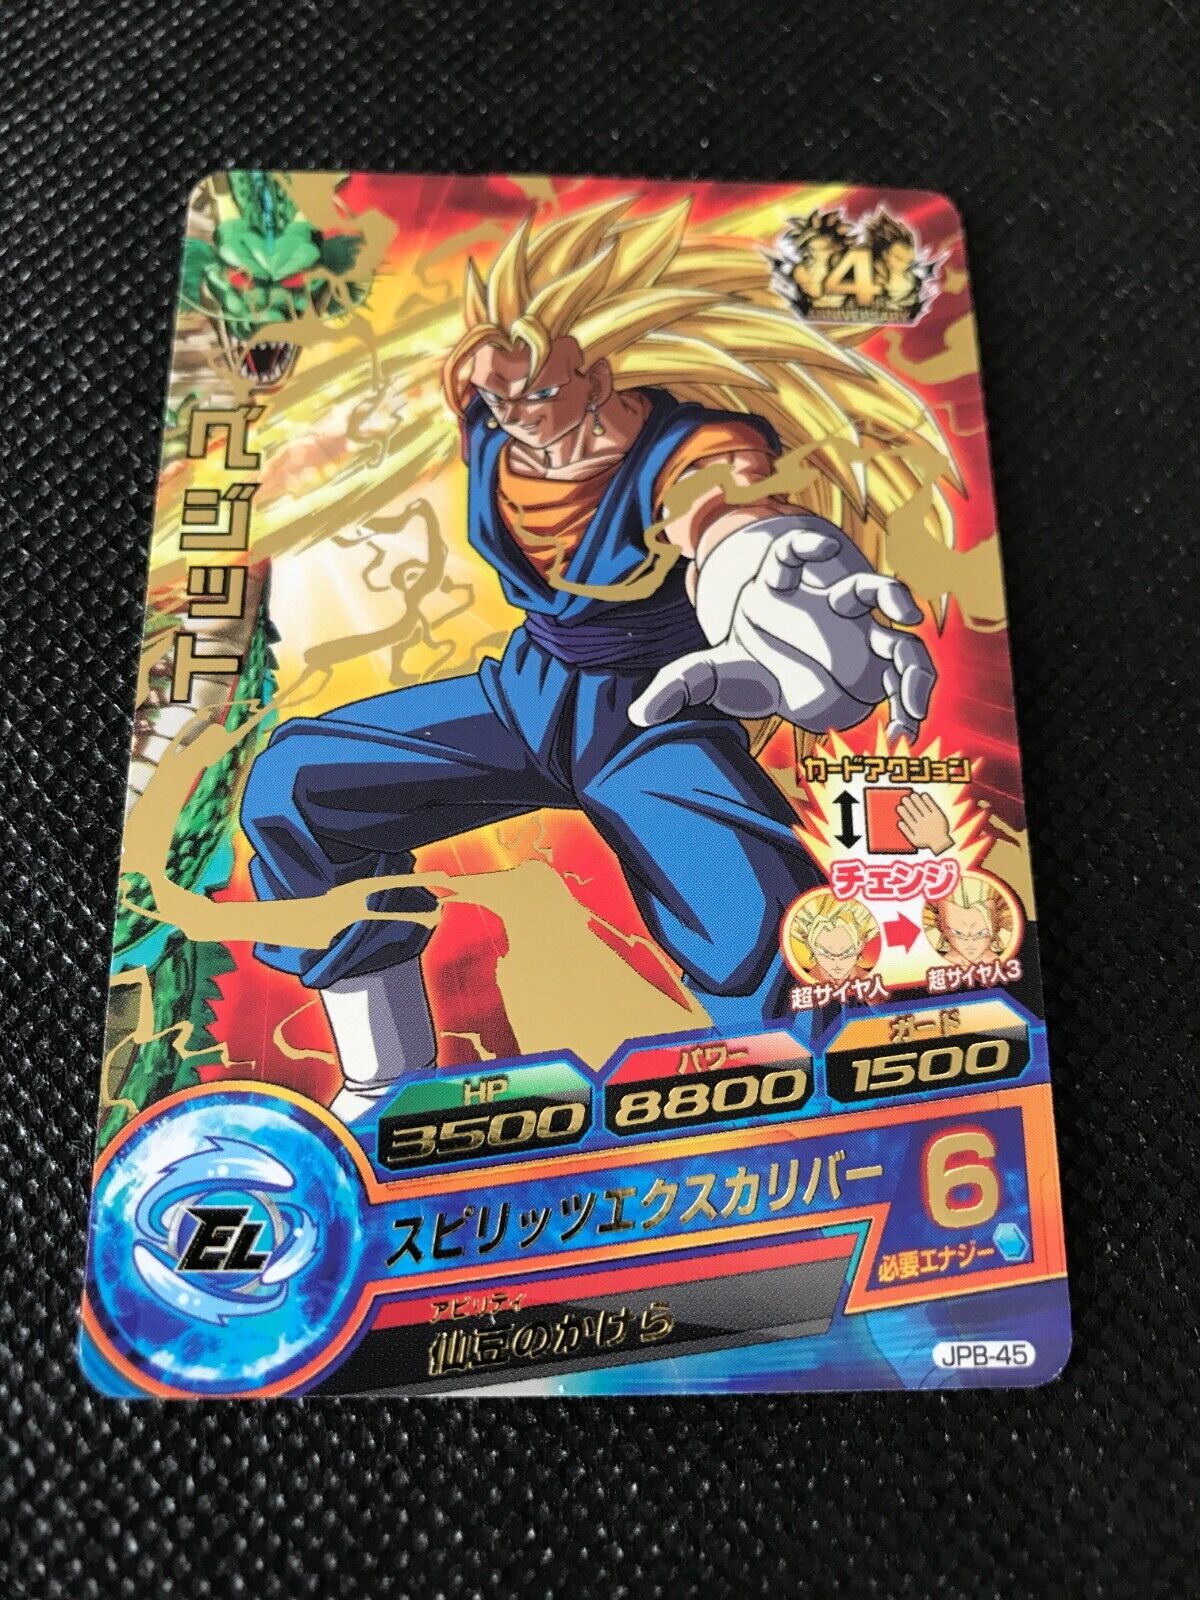 Vegito 4th Anniversary Promo JPB-45 Super Dragon Ball Heroes Card